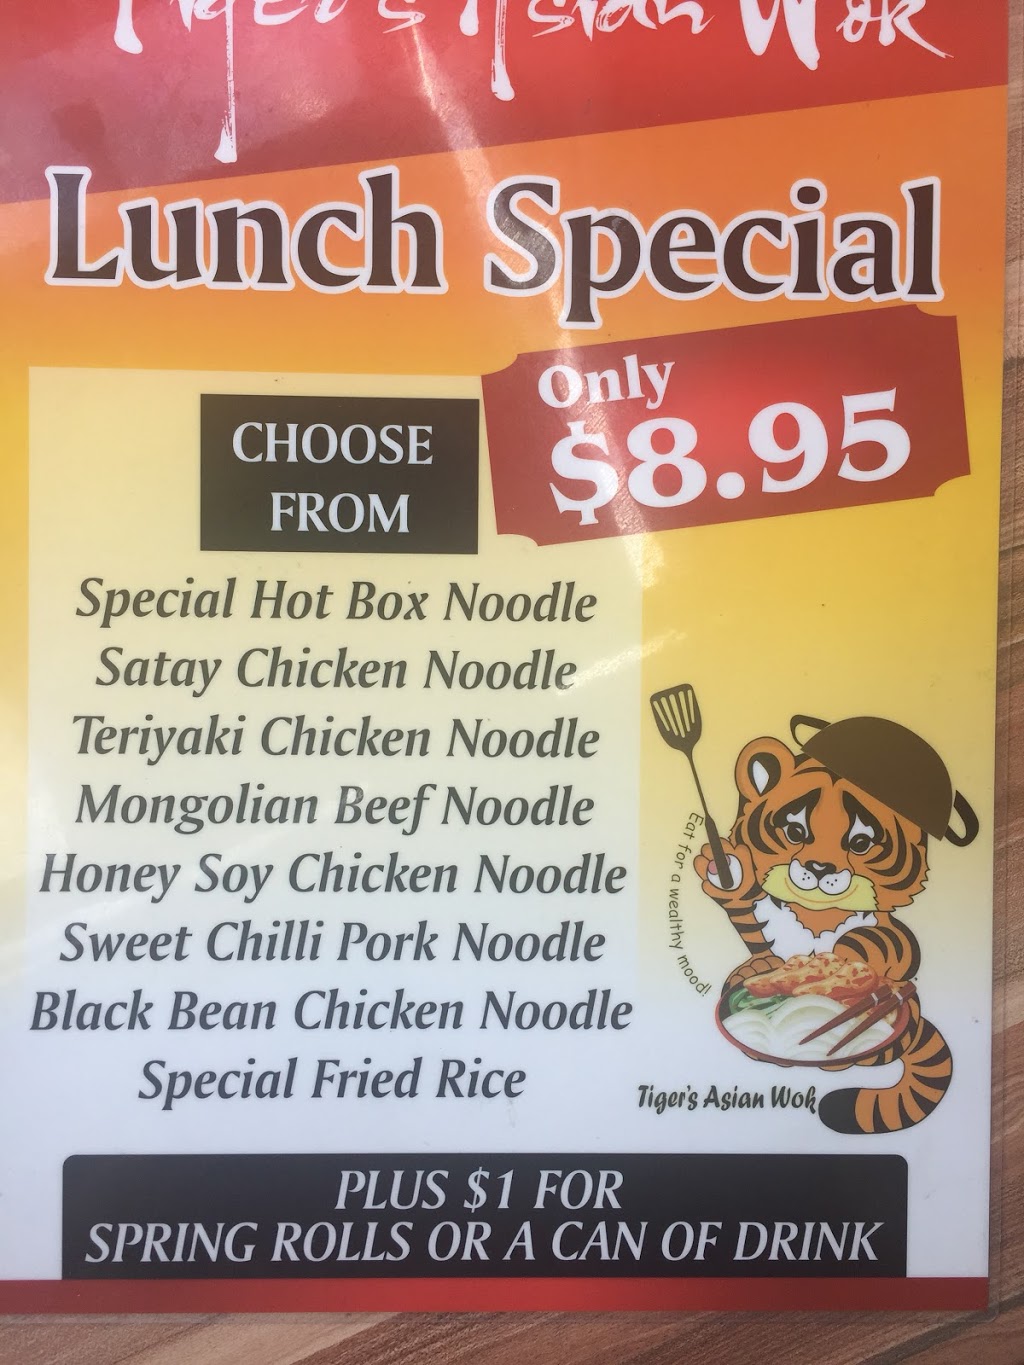 Asian Wok | meal takeaway | 2/2 Shore St W, Ormiston QLD 4160, Australia | 0732869002 OR +61 7 3286 9002